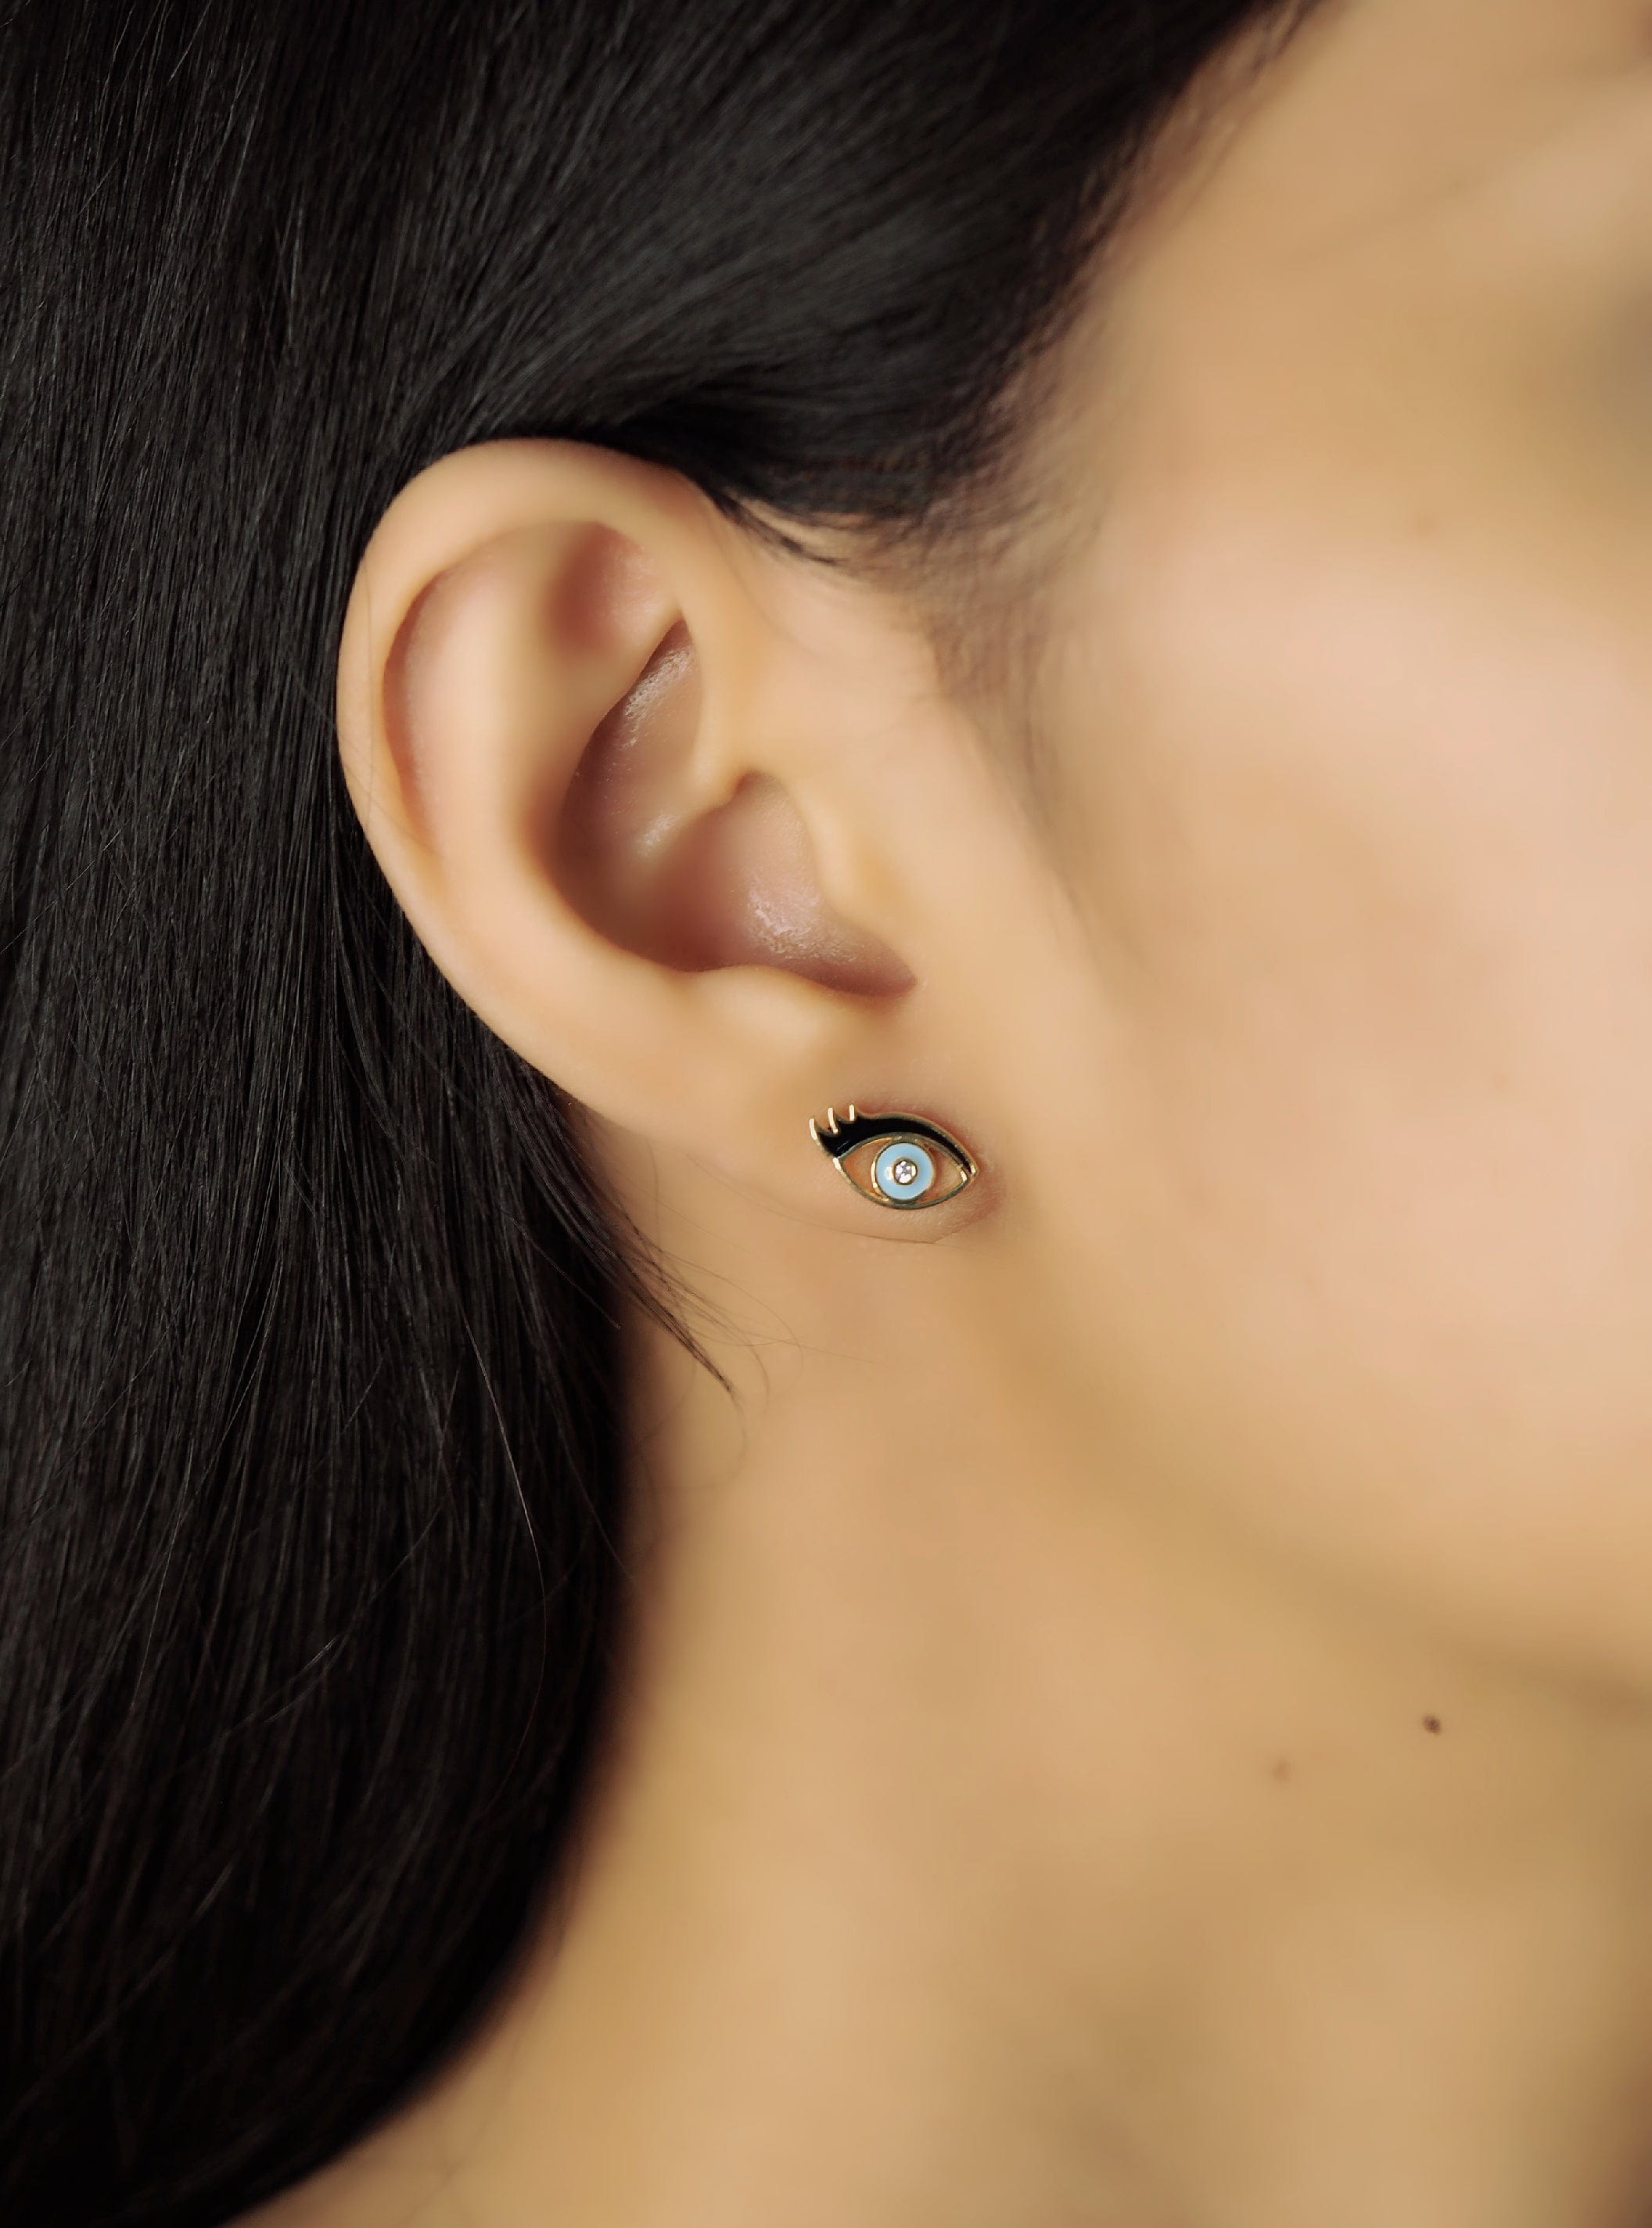 TAI JEWELRY Earrings Enamel Eye With Lashes Studs